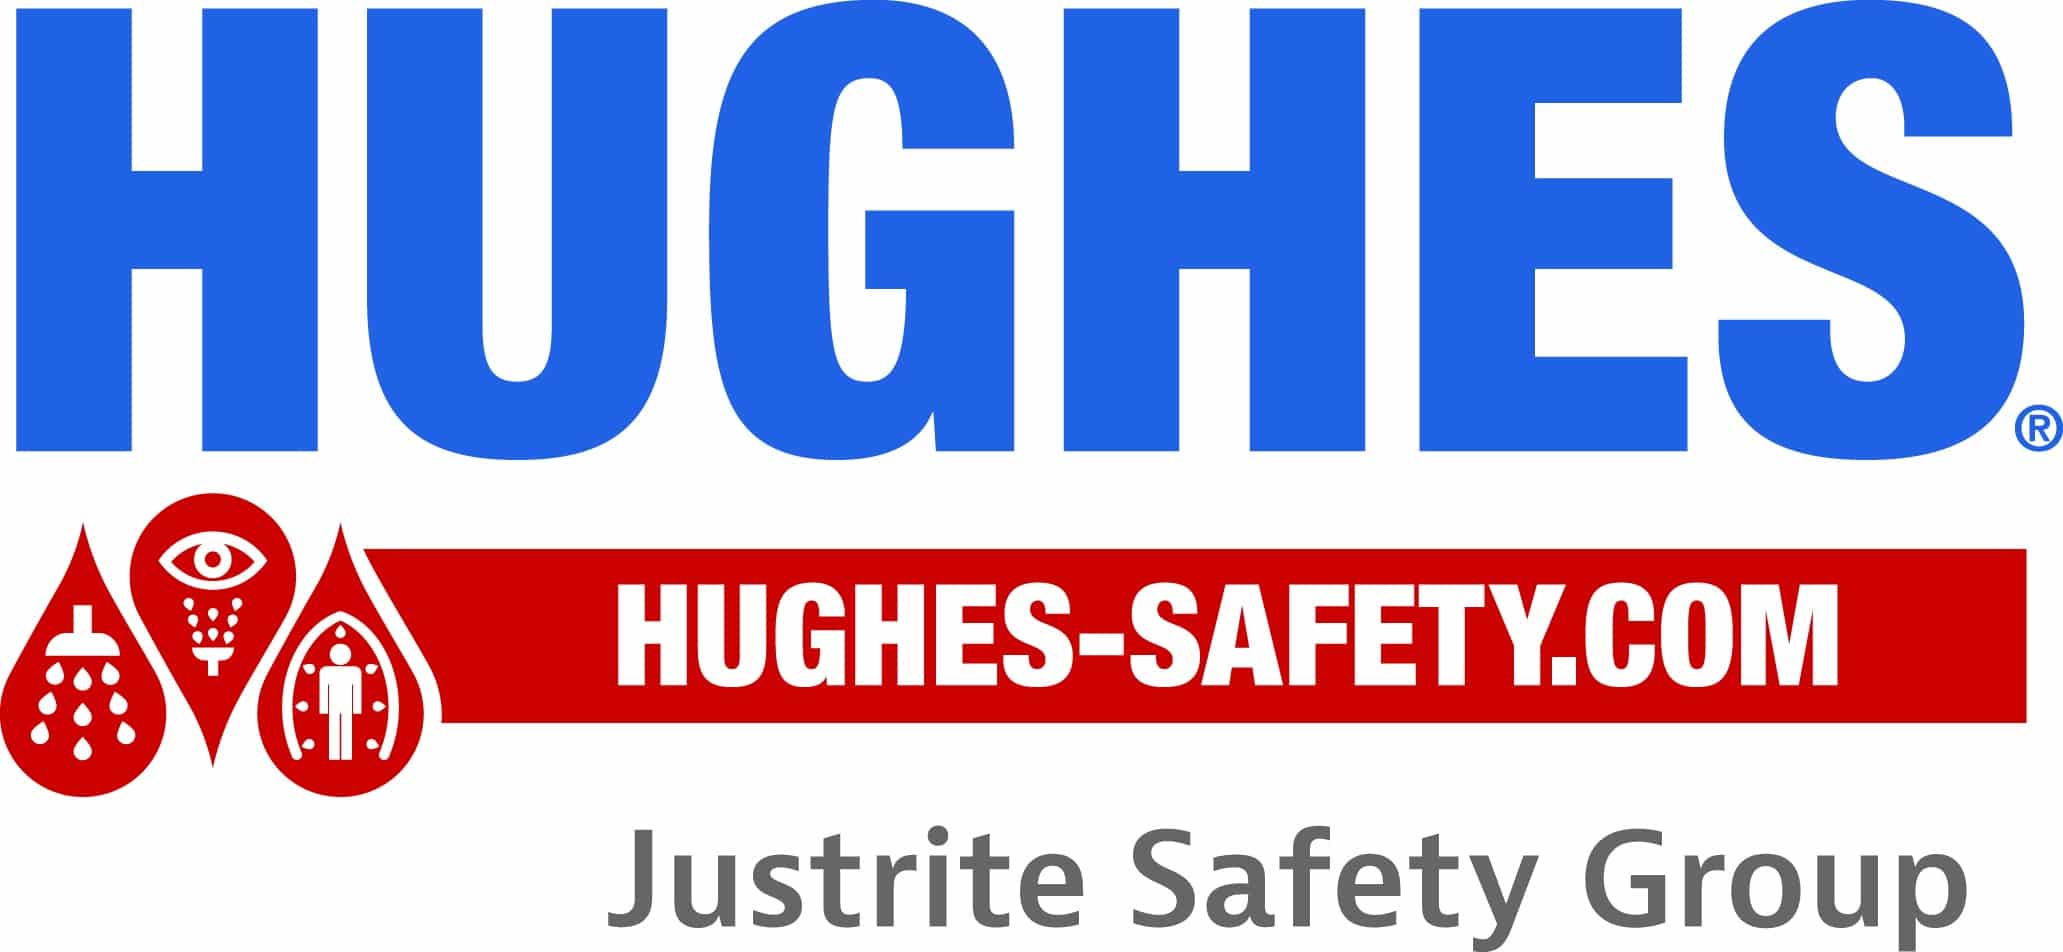 HUS-New Logo-21-4-21.cdr